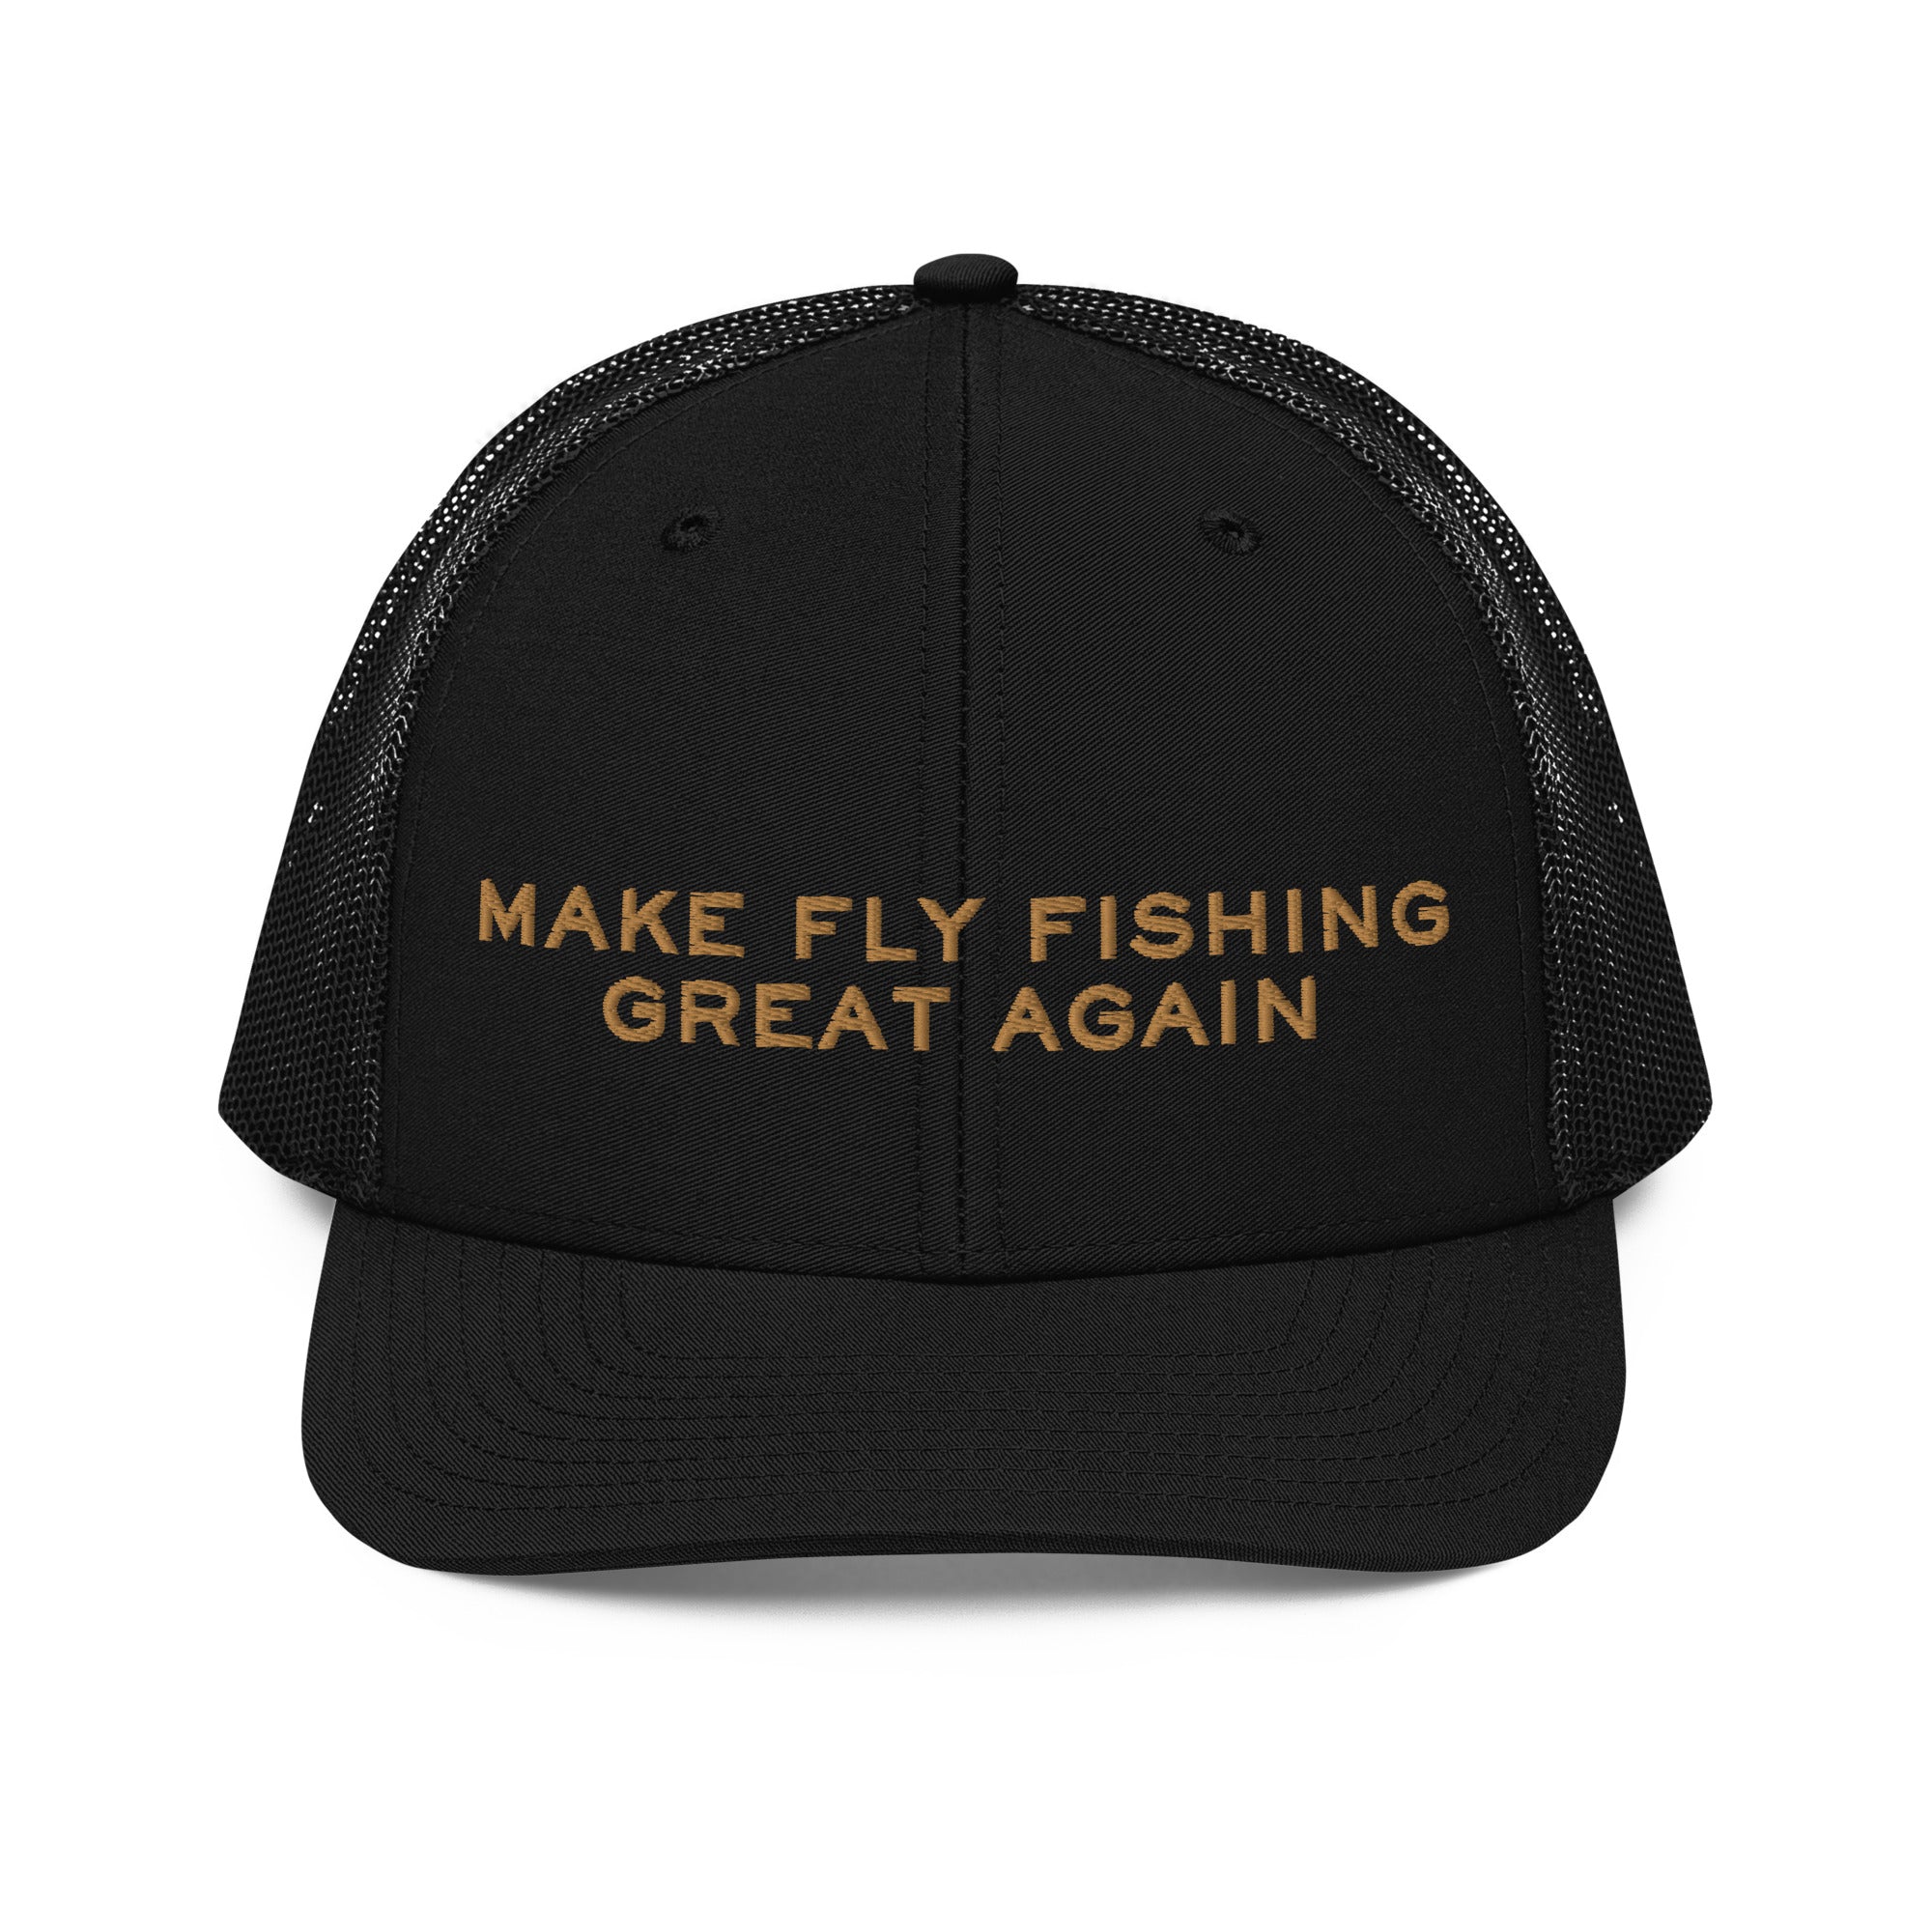 Fly fishing fly fishing' Snapback Cap